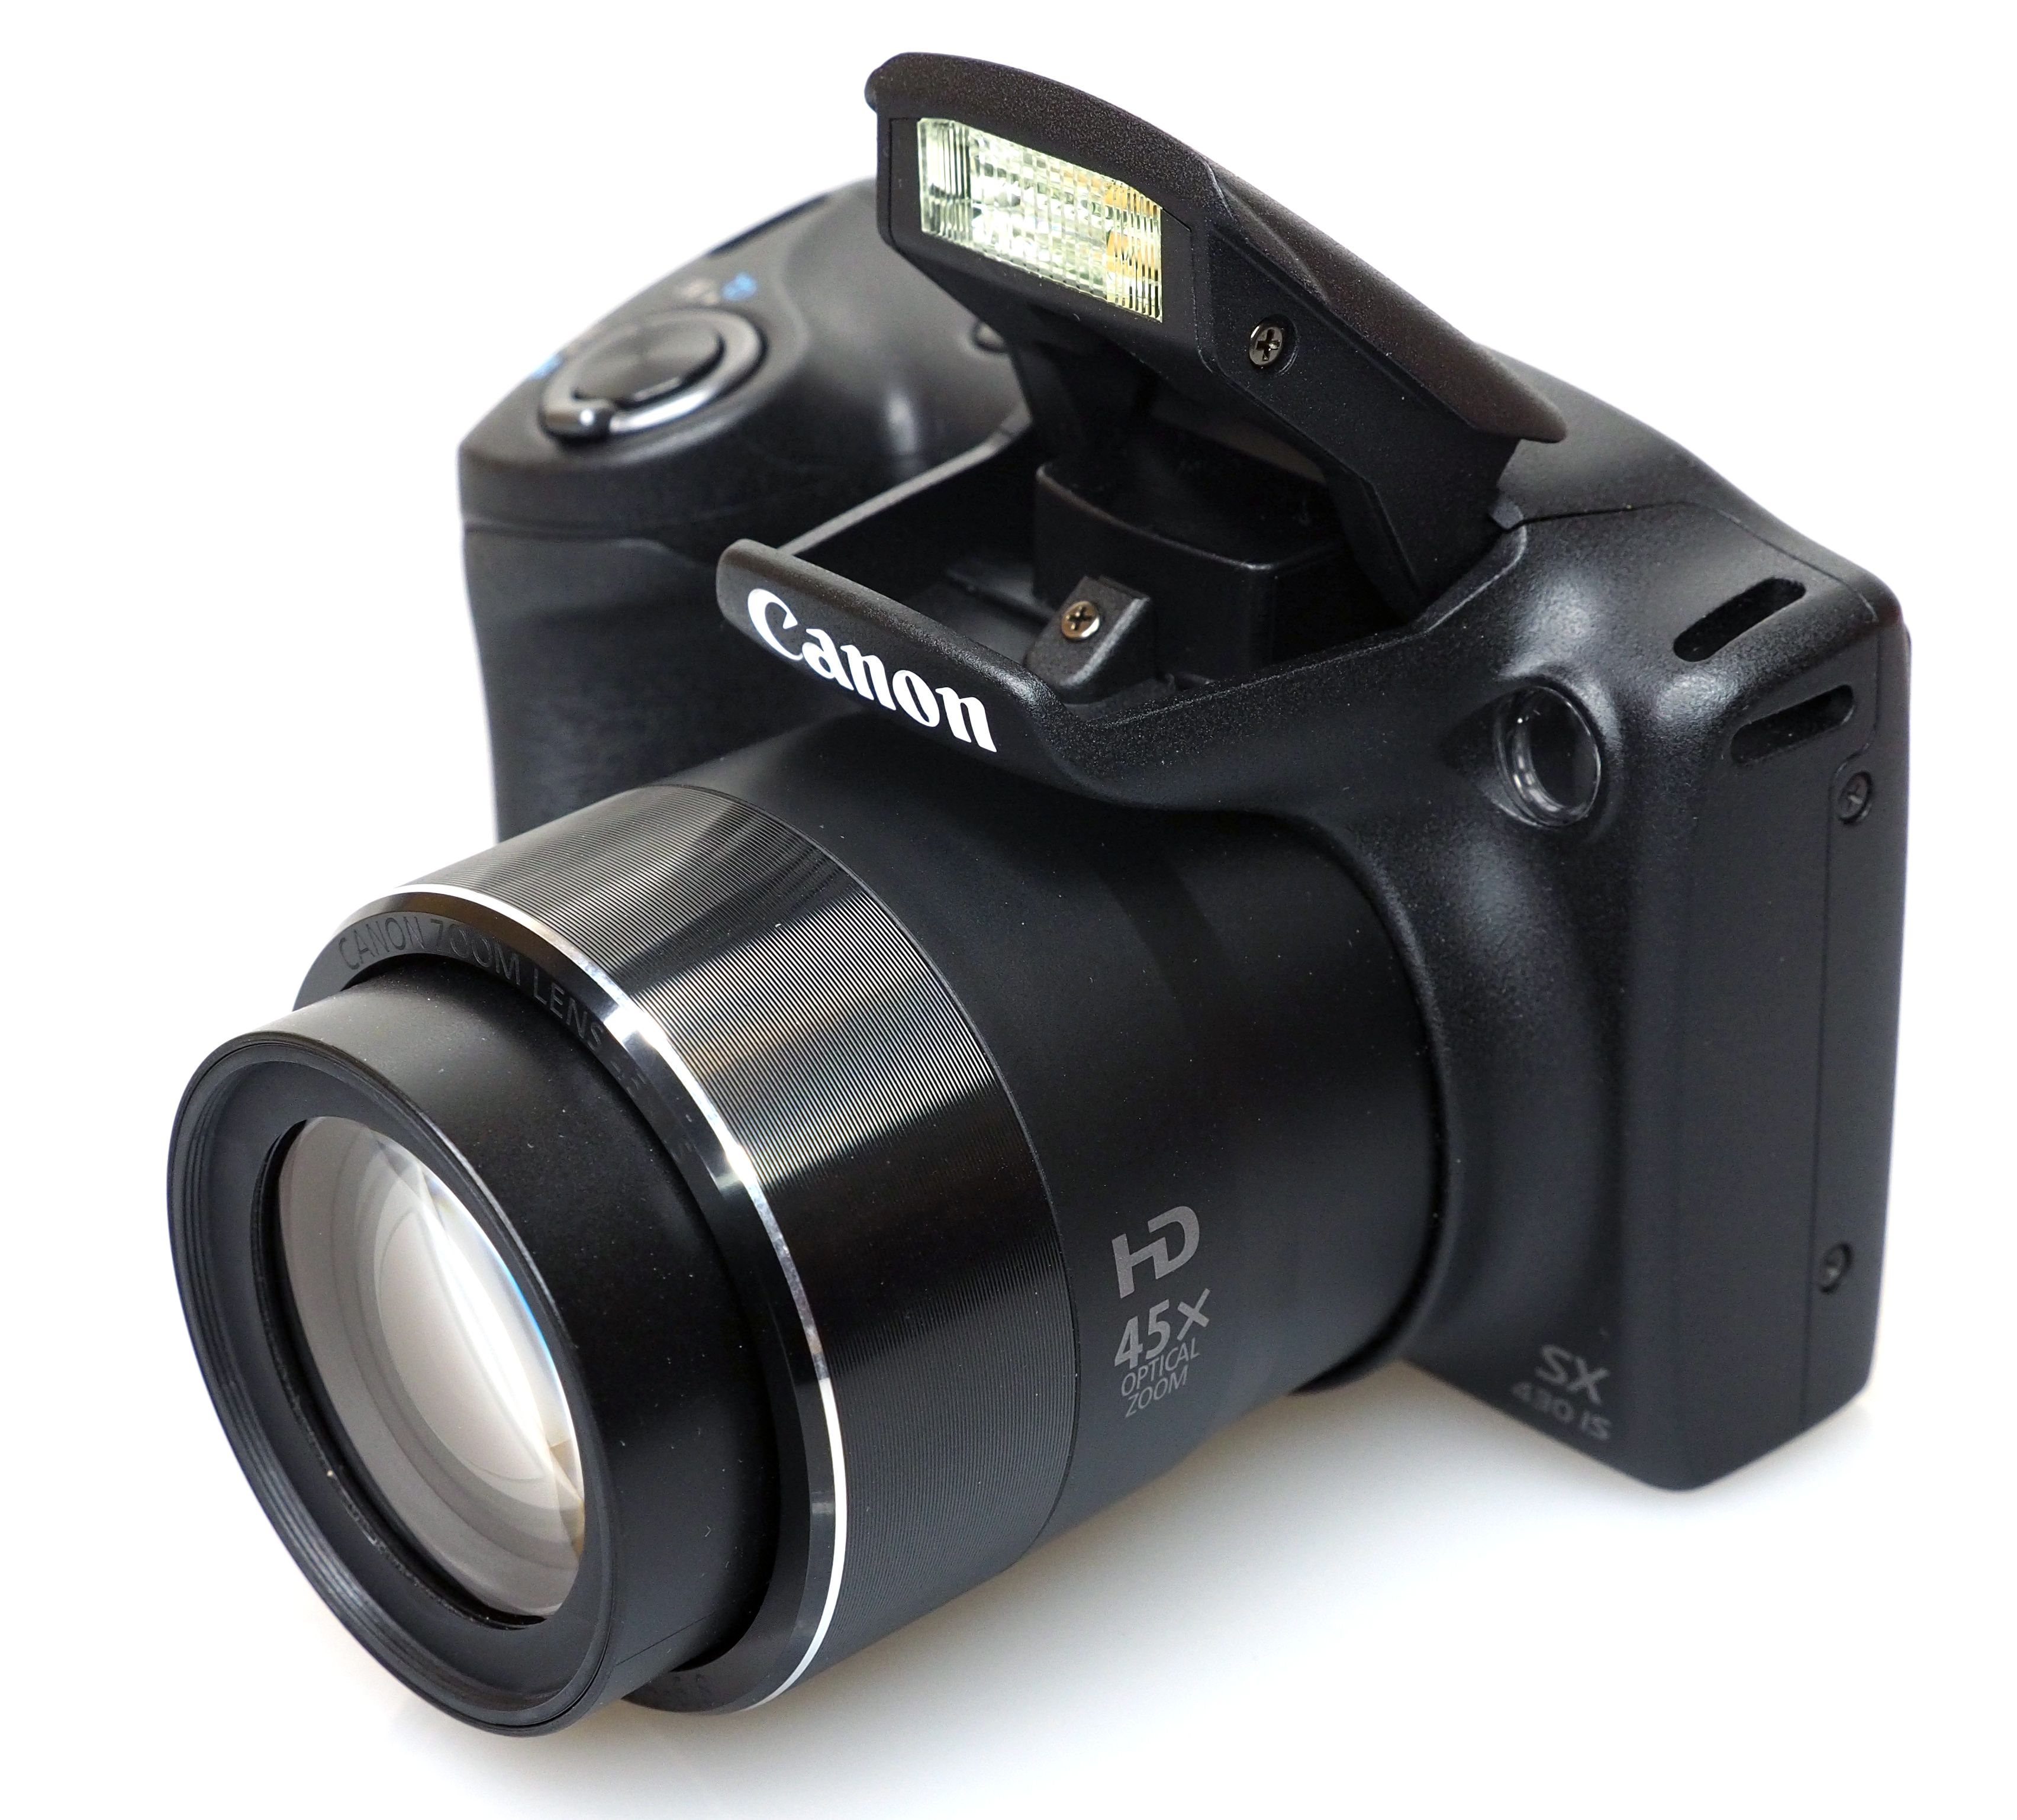 Canon PowerShot SX430 IS Digital Compact Camera - Black: .co